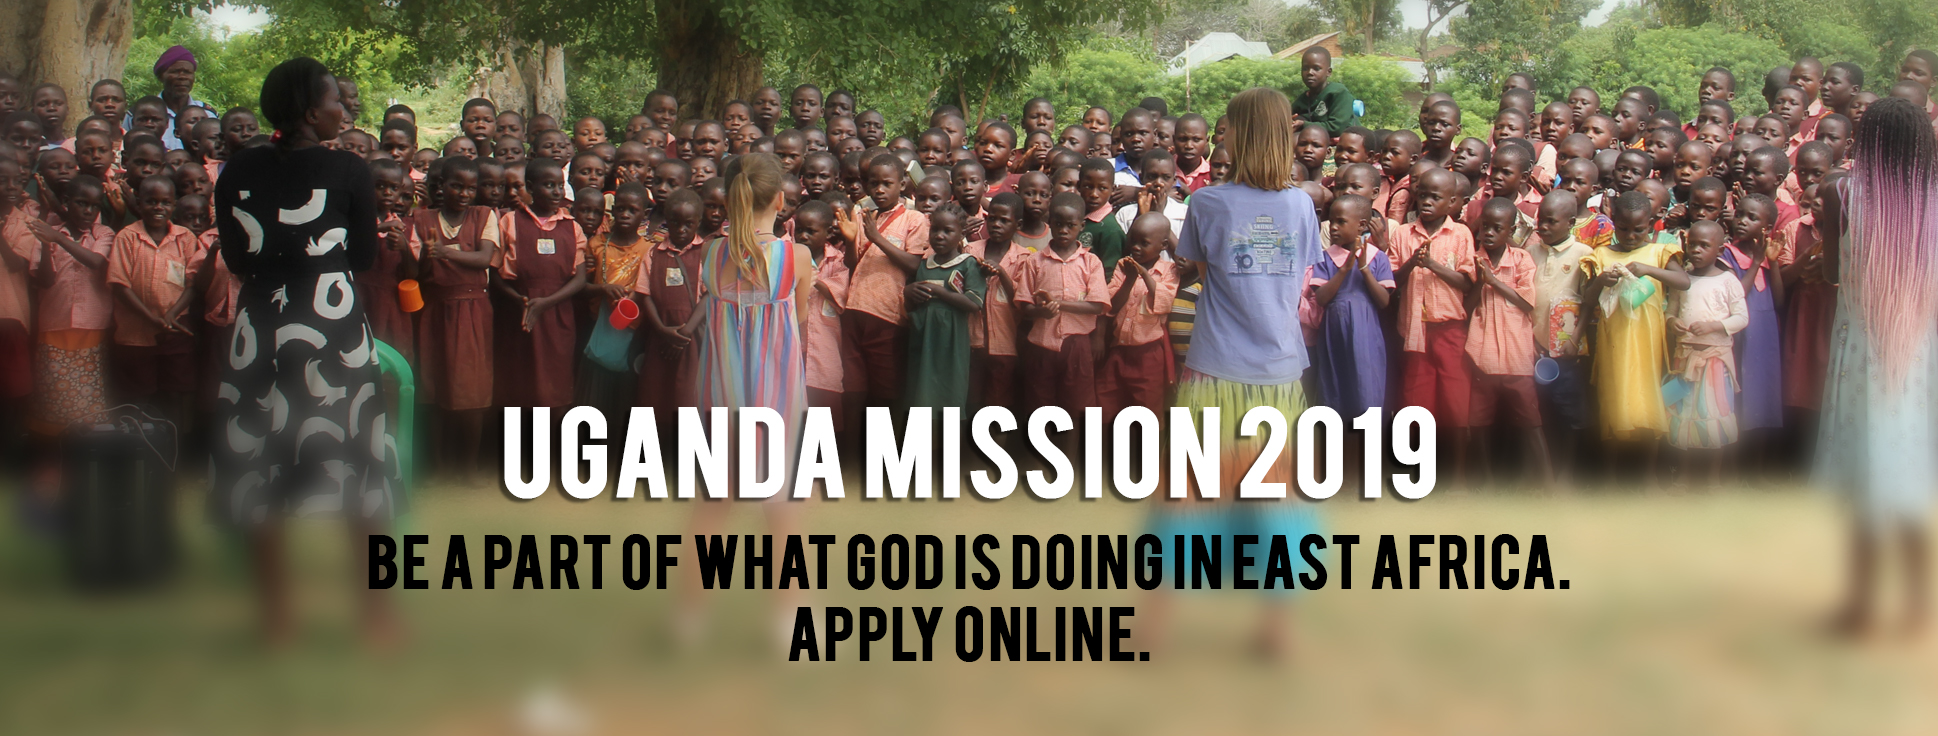 Uganda Mission 2019 – Apply Online